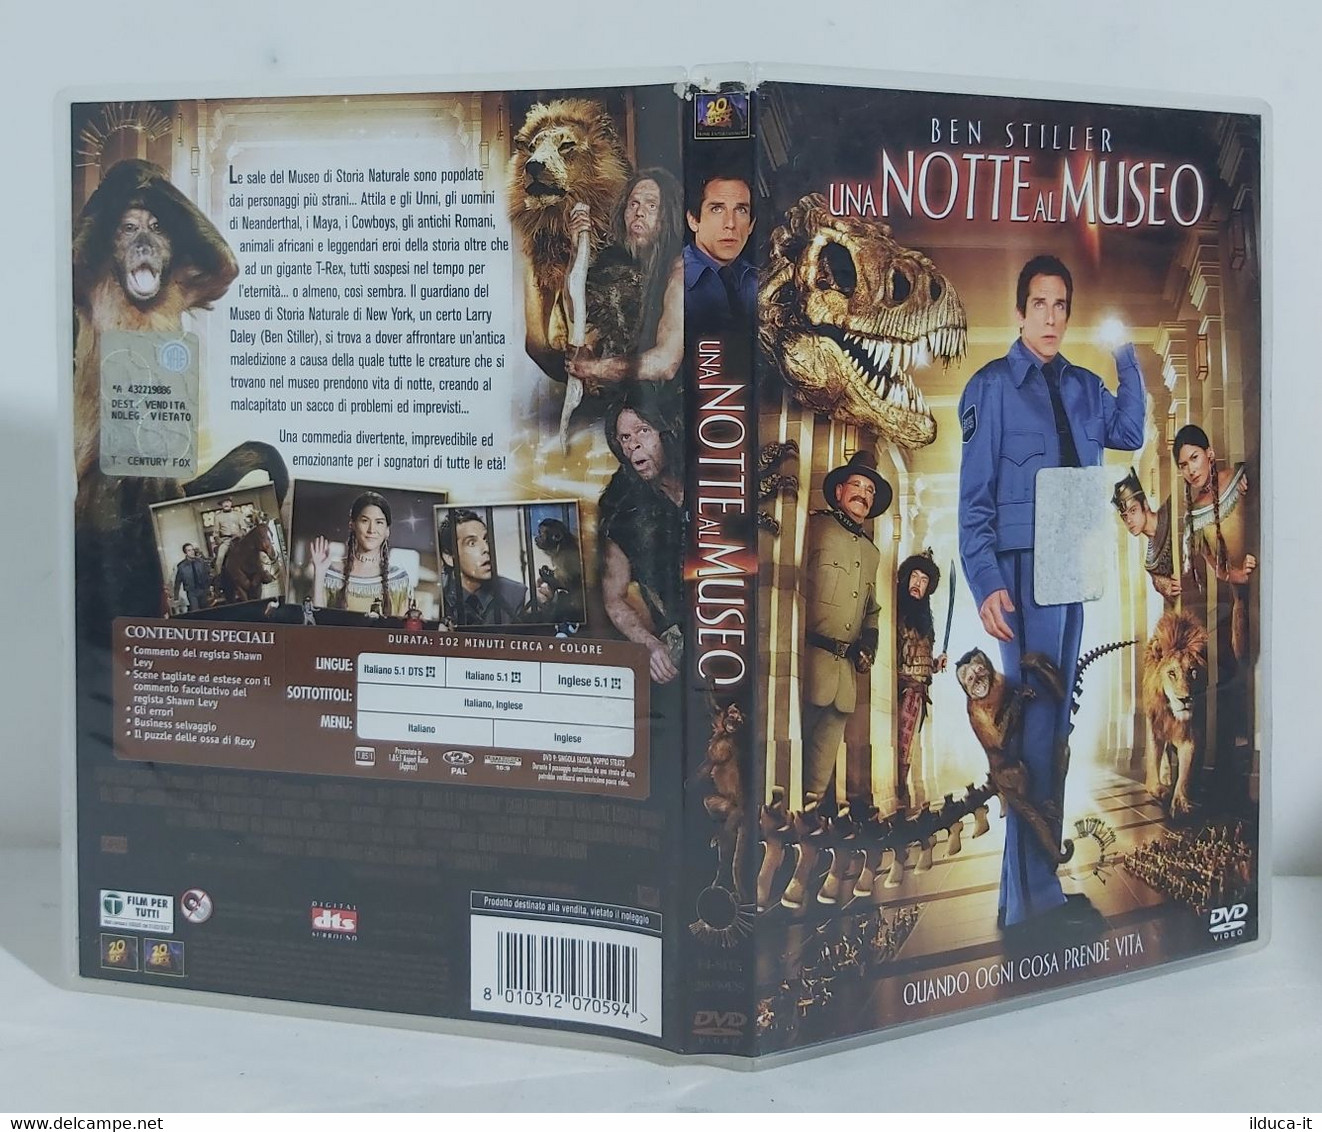 I102780 DVD - UNA NOTTE AL MUSEO (2006) - Ben Stiller - Fantasy